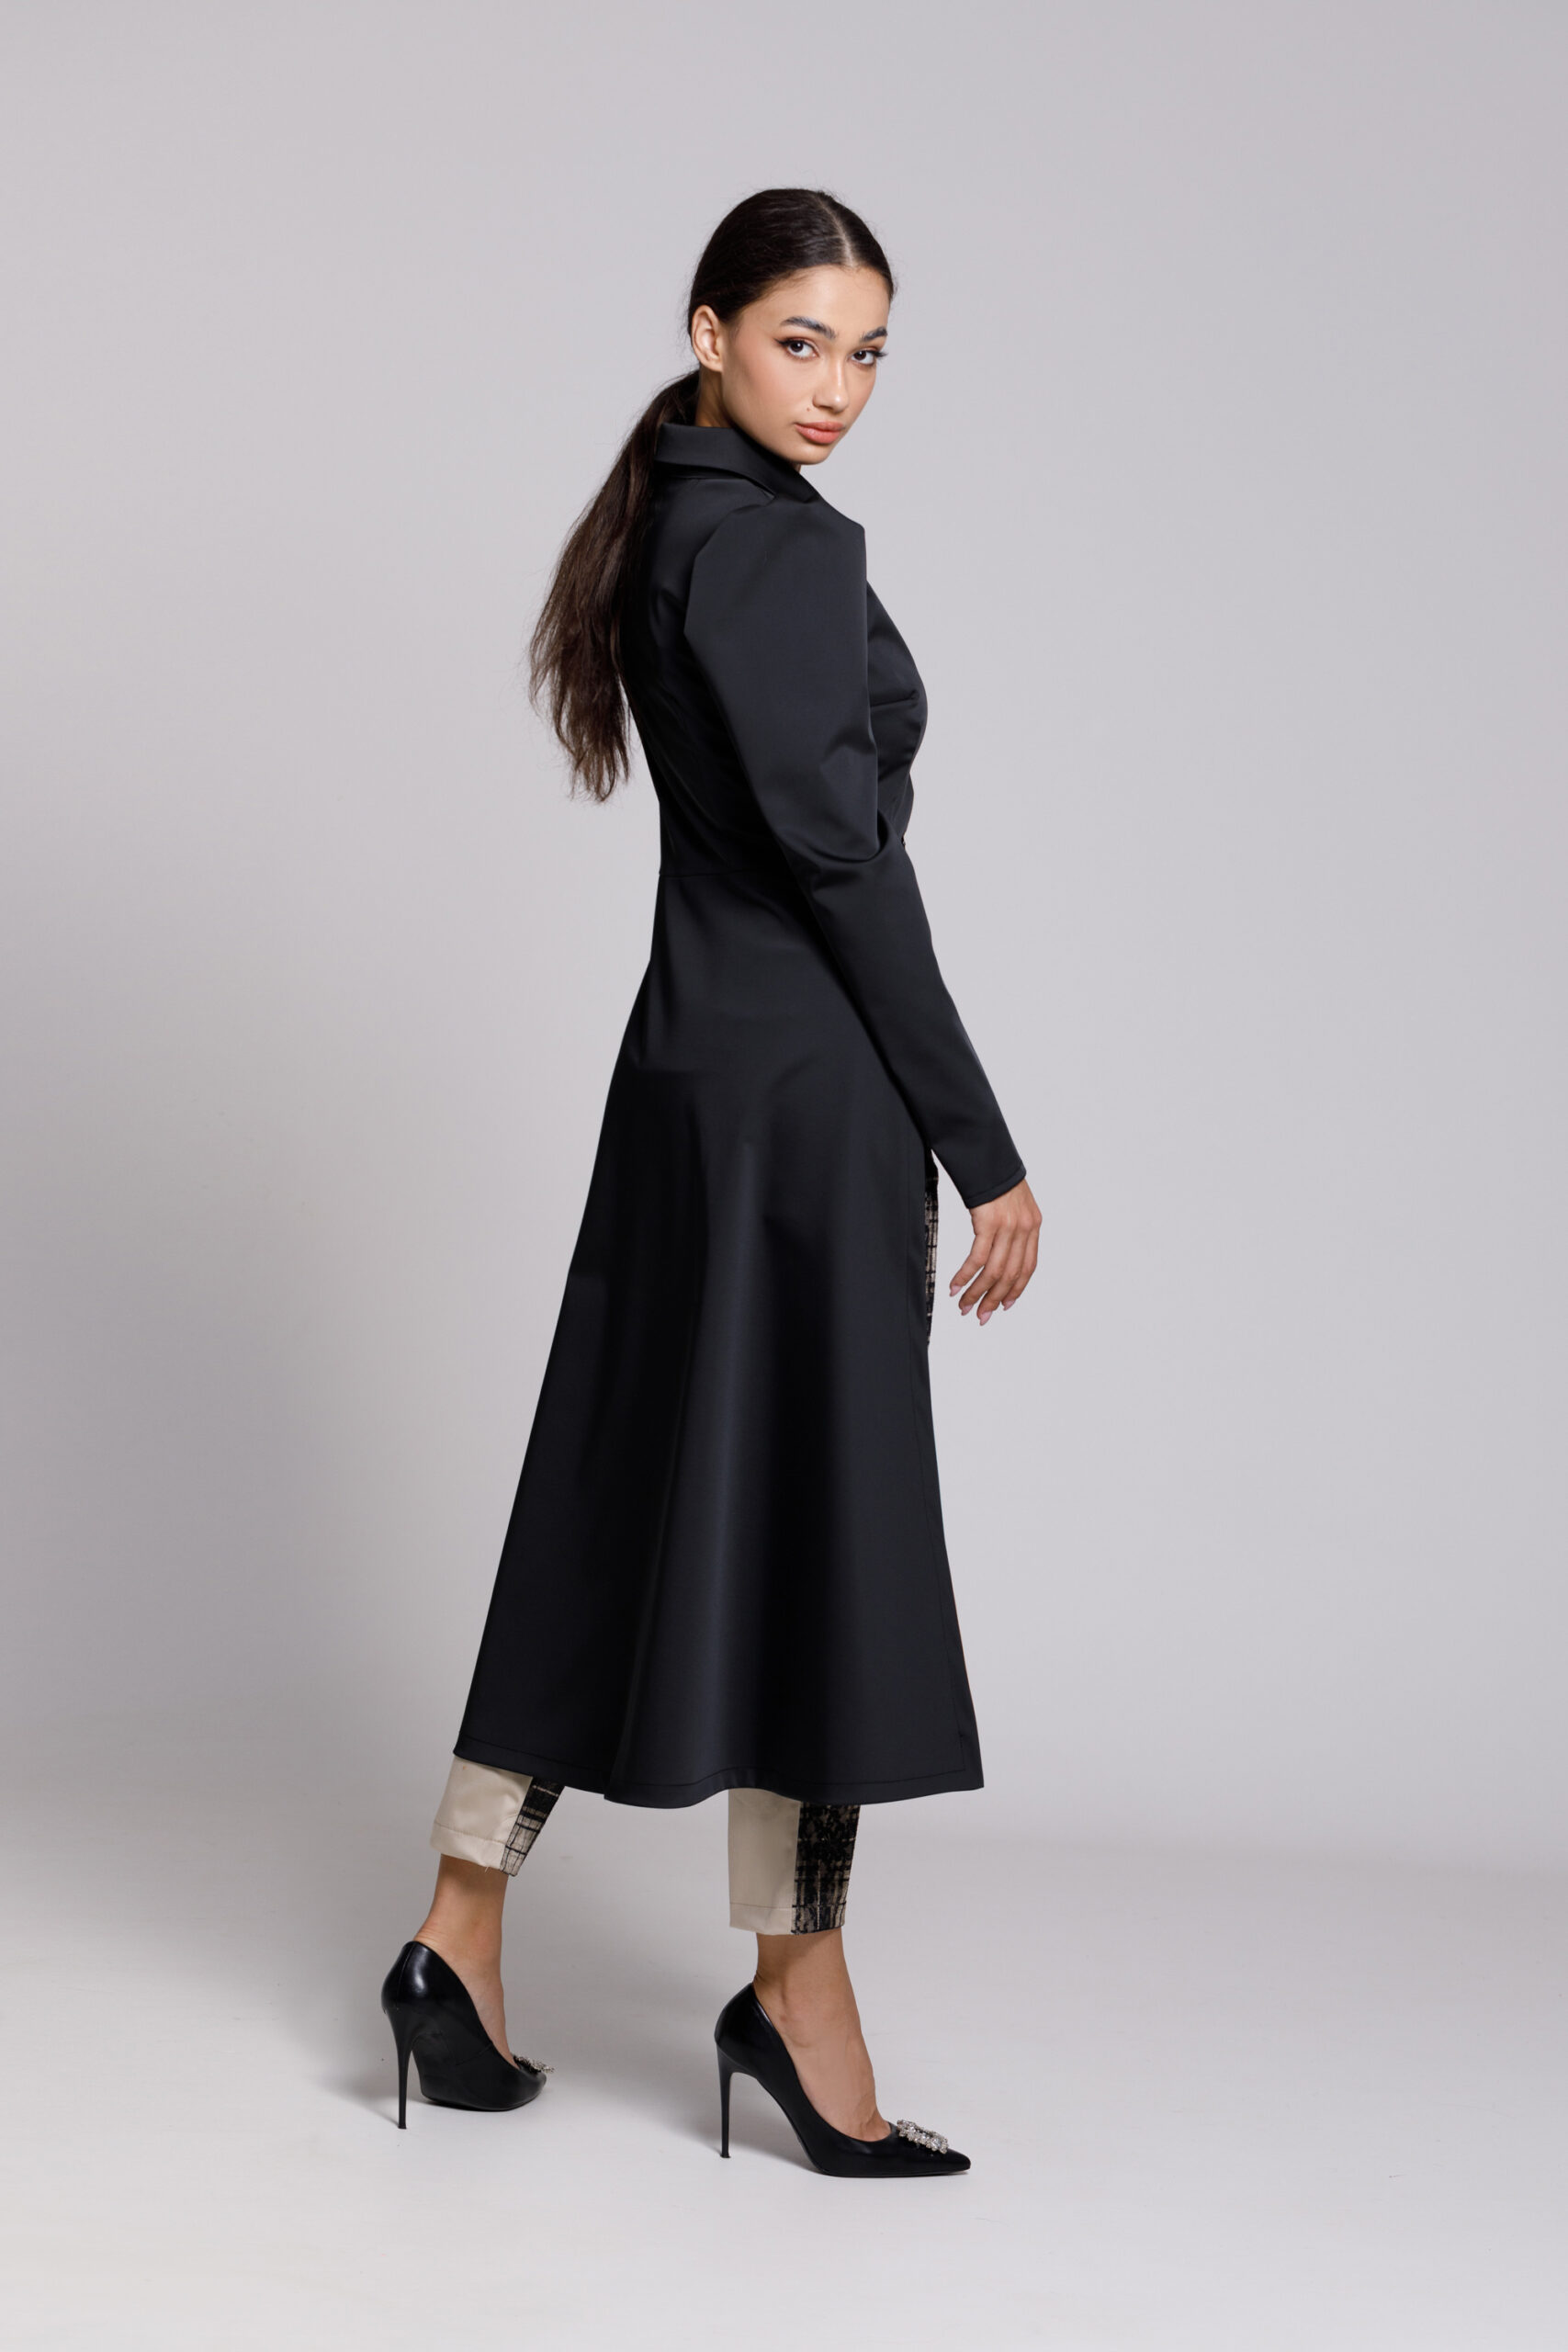 KENZO elegant black tailcoat type jacket. Natural fabrics, original design, handmade embroidery